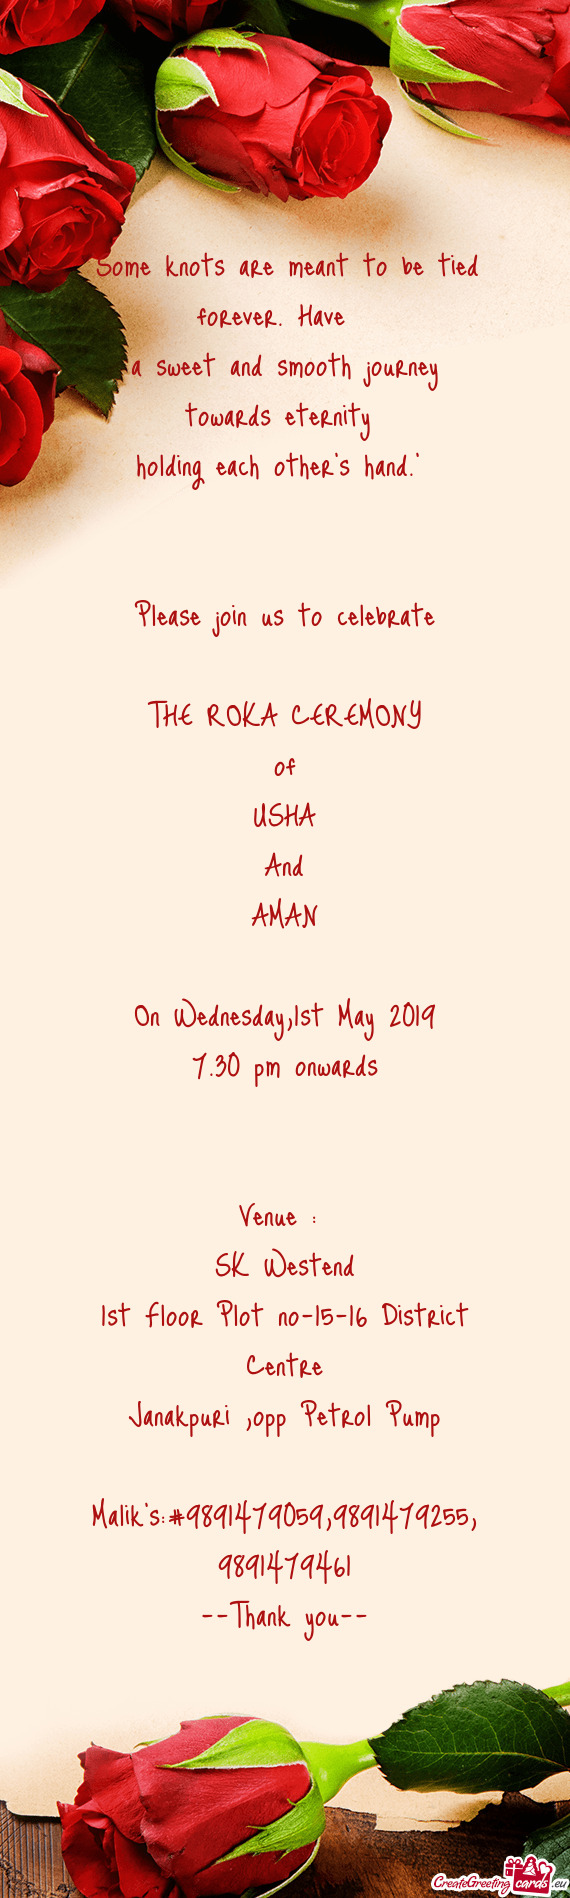 " 
 
 
 Please join us to celebrate
 
 THE ROKA CEREMONY
 of
 USHA
 And
 AMAN
 
 On Wednesday